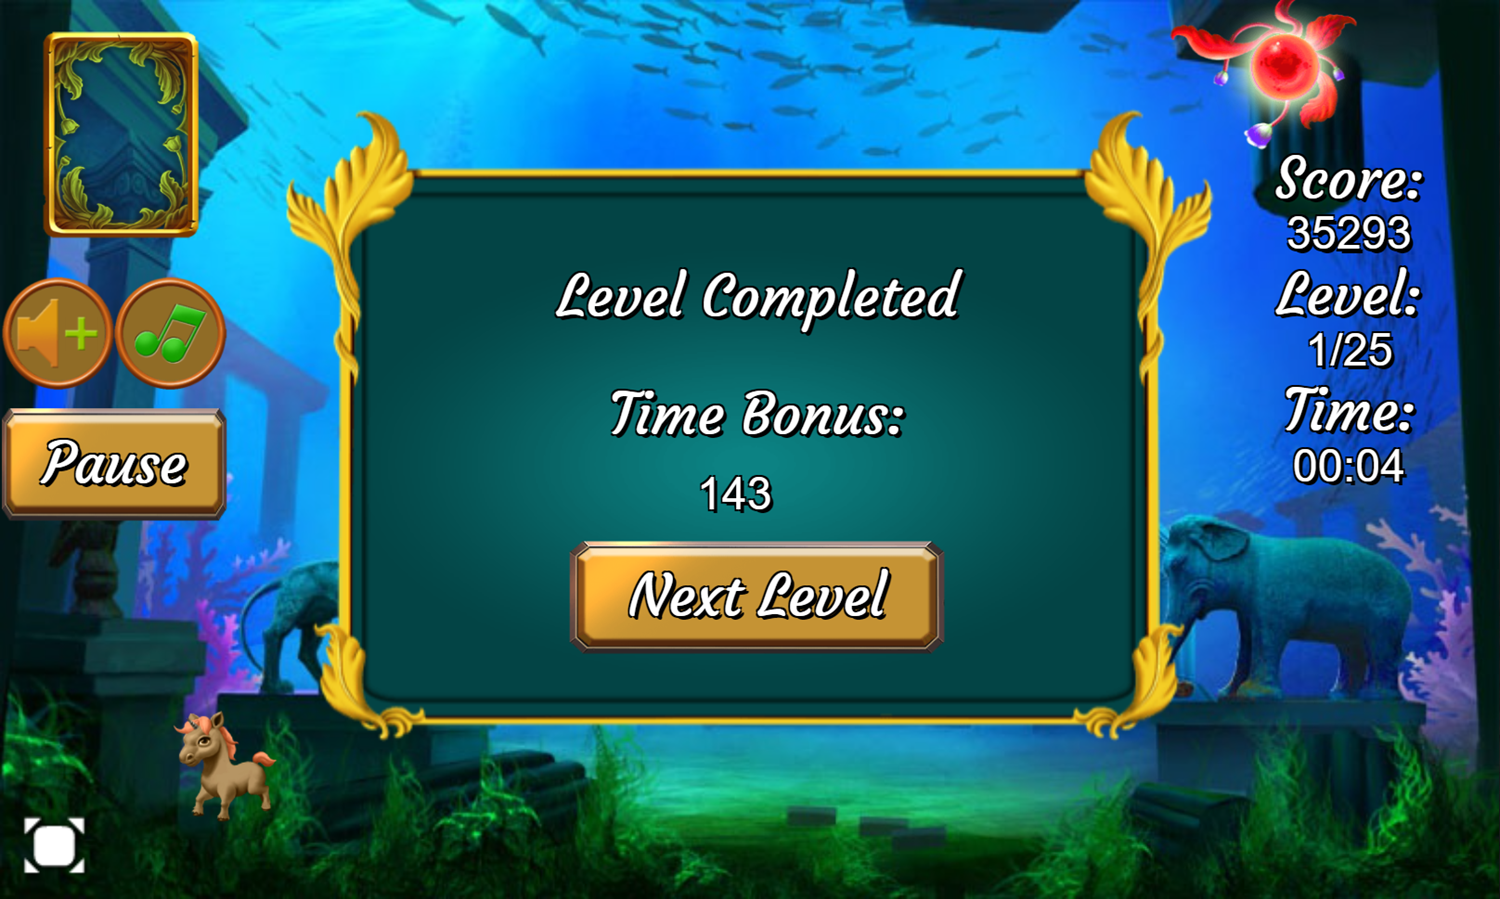 Treasures of Atlantis Game Level Completed Screenshot.